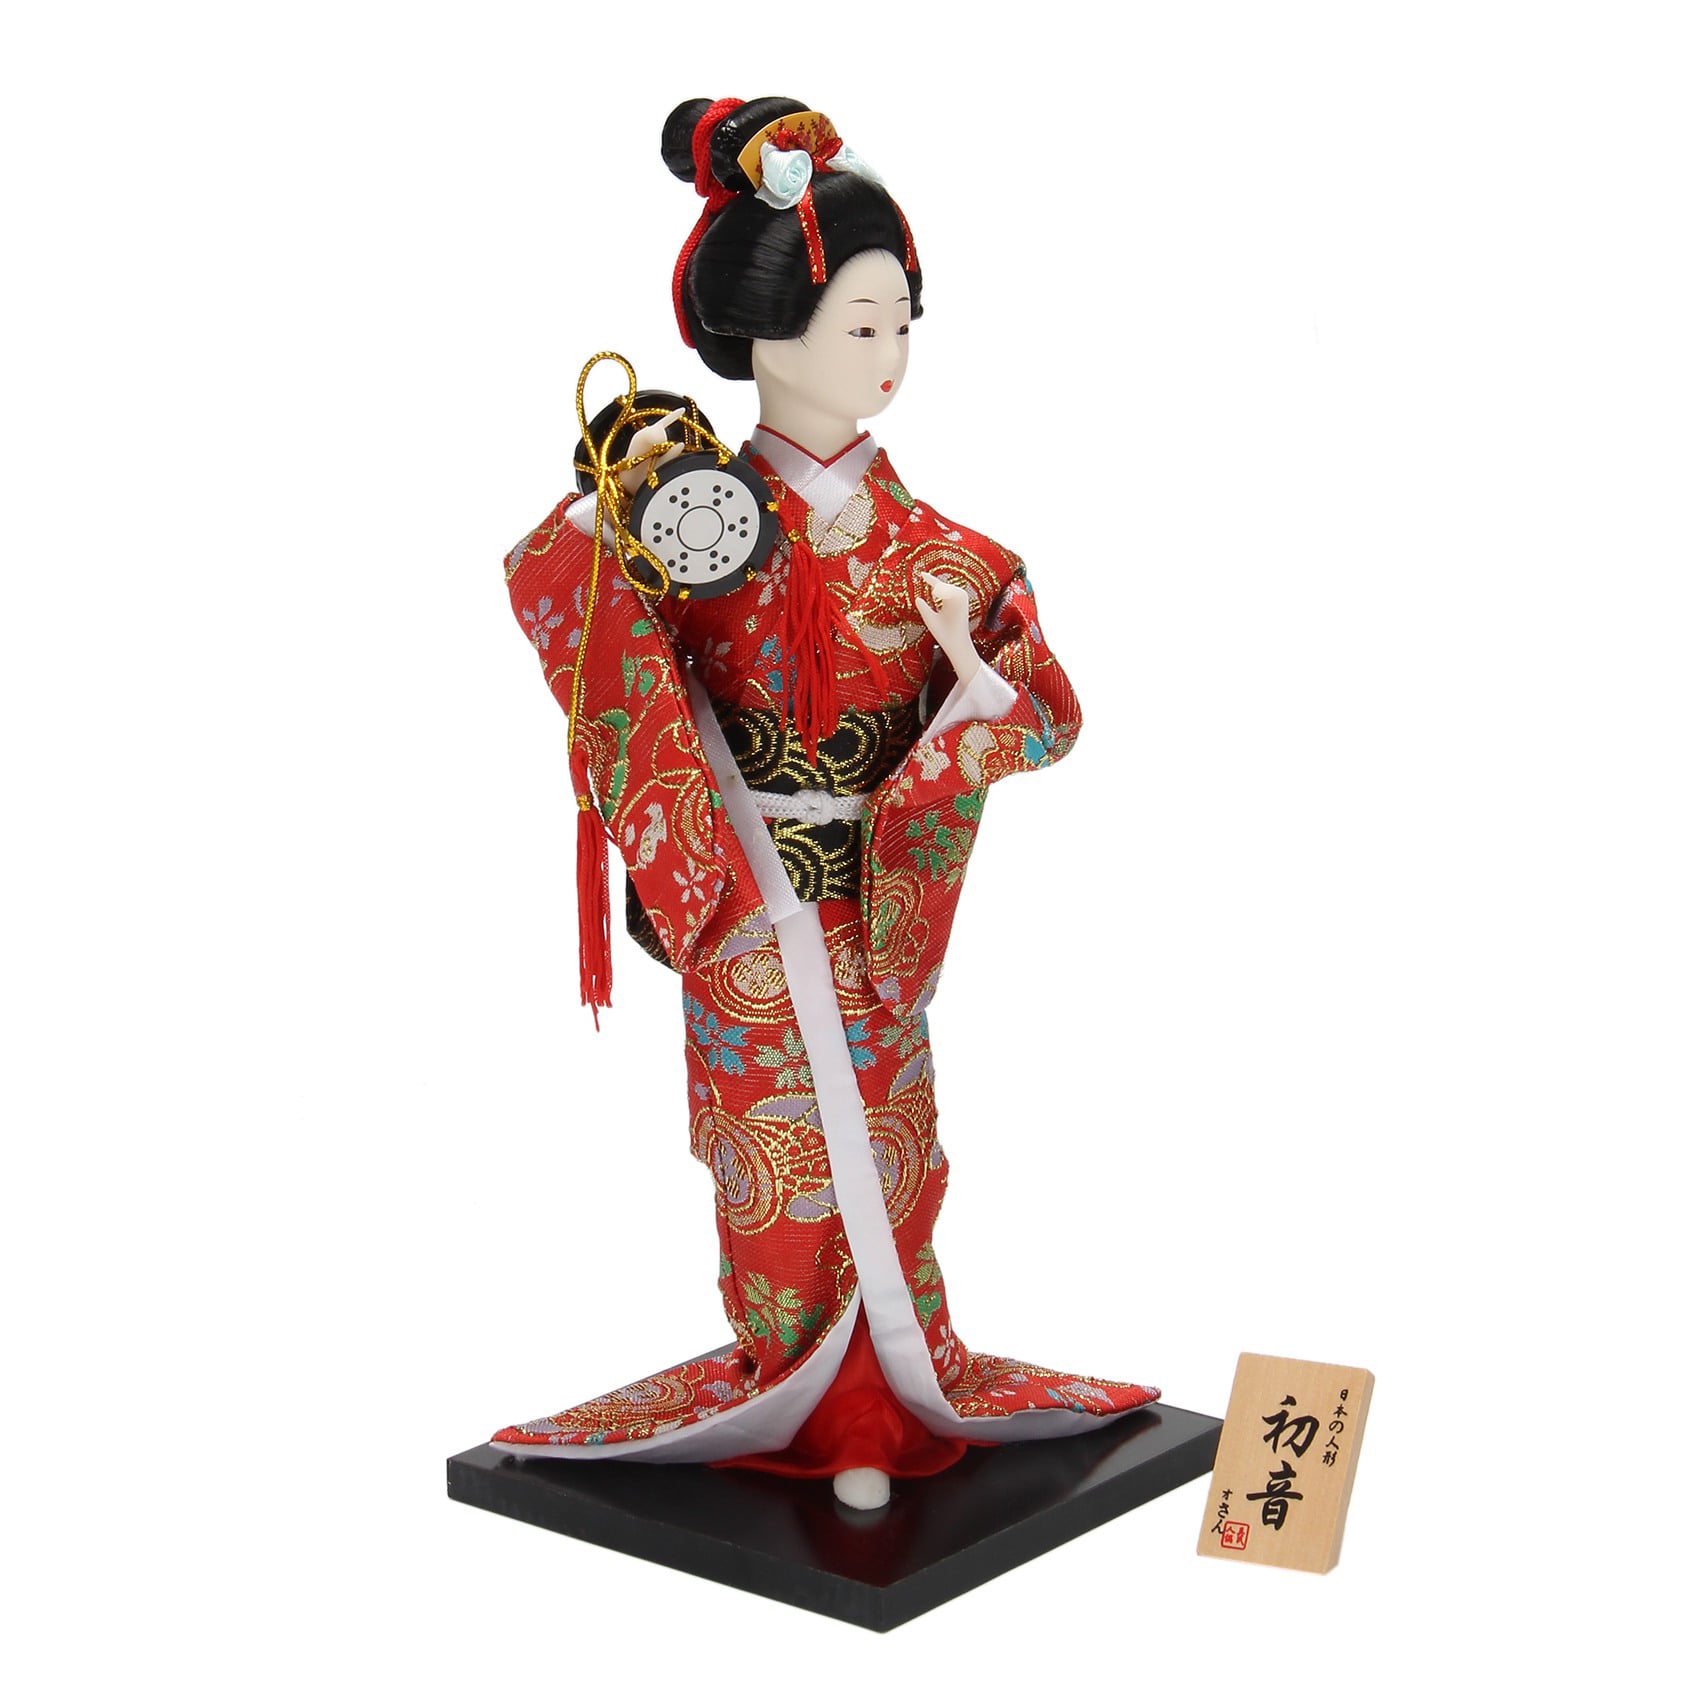 12inch Ancient Japanese Lady Figurine Geisha Doll in Rose Red Kimono w/ Fan 